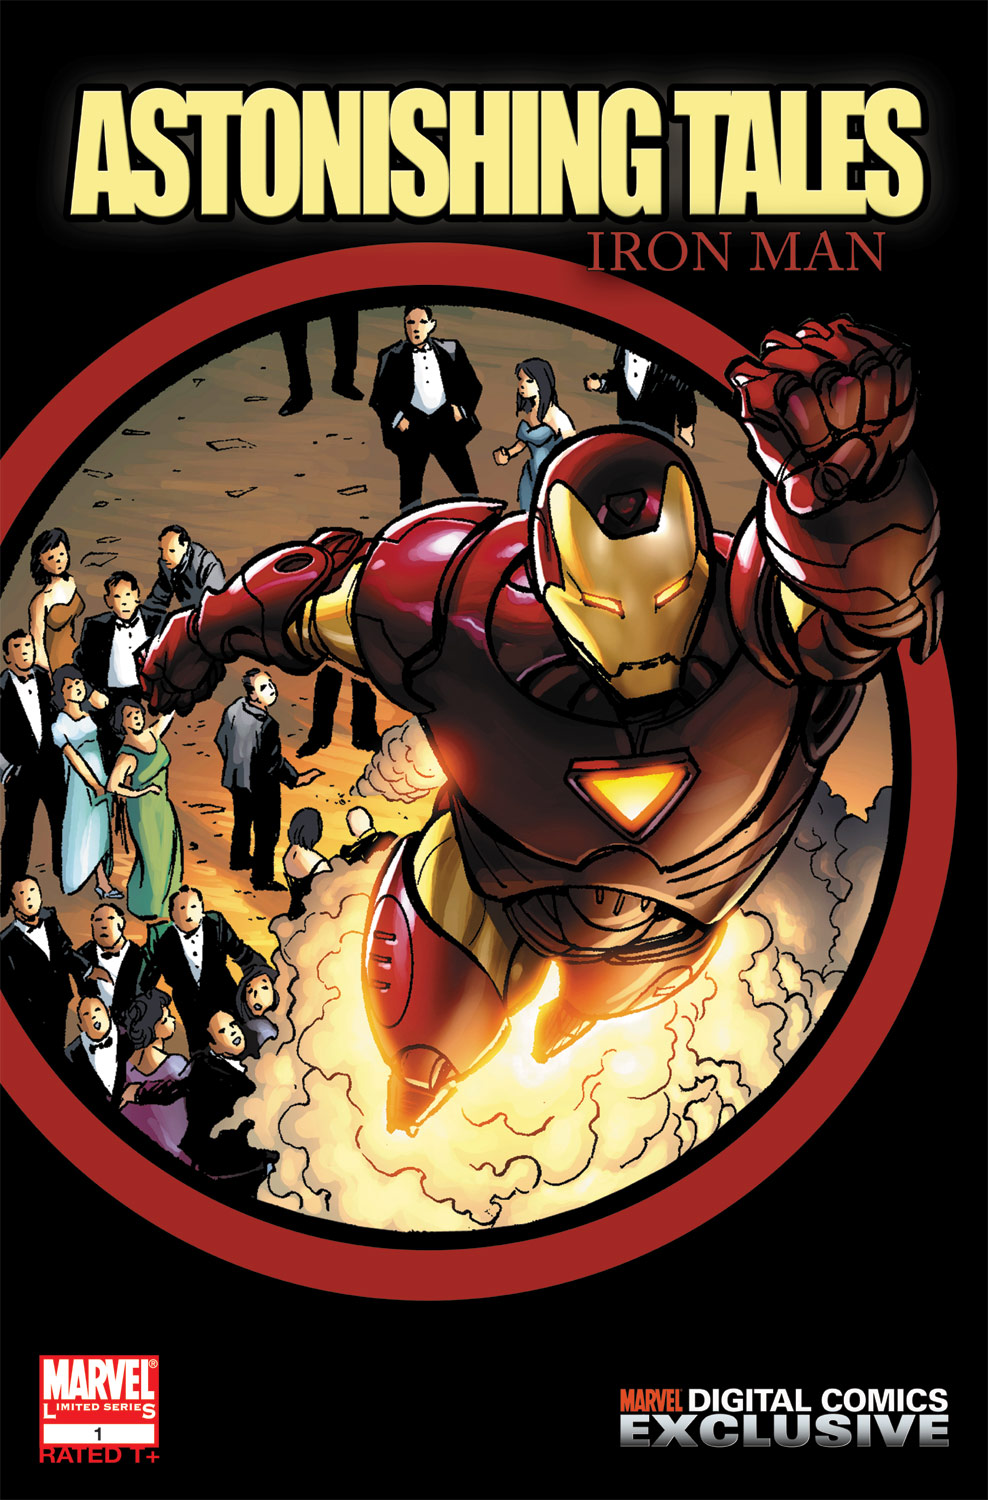 Astonishing Tales: One-Shots (Iron Man) Digital Comic (2008) #1